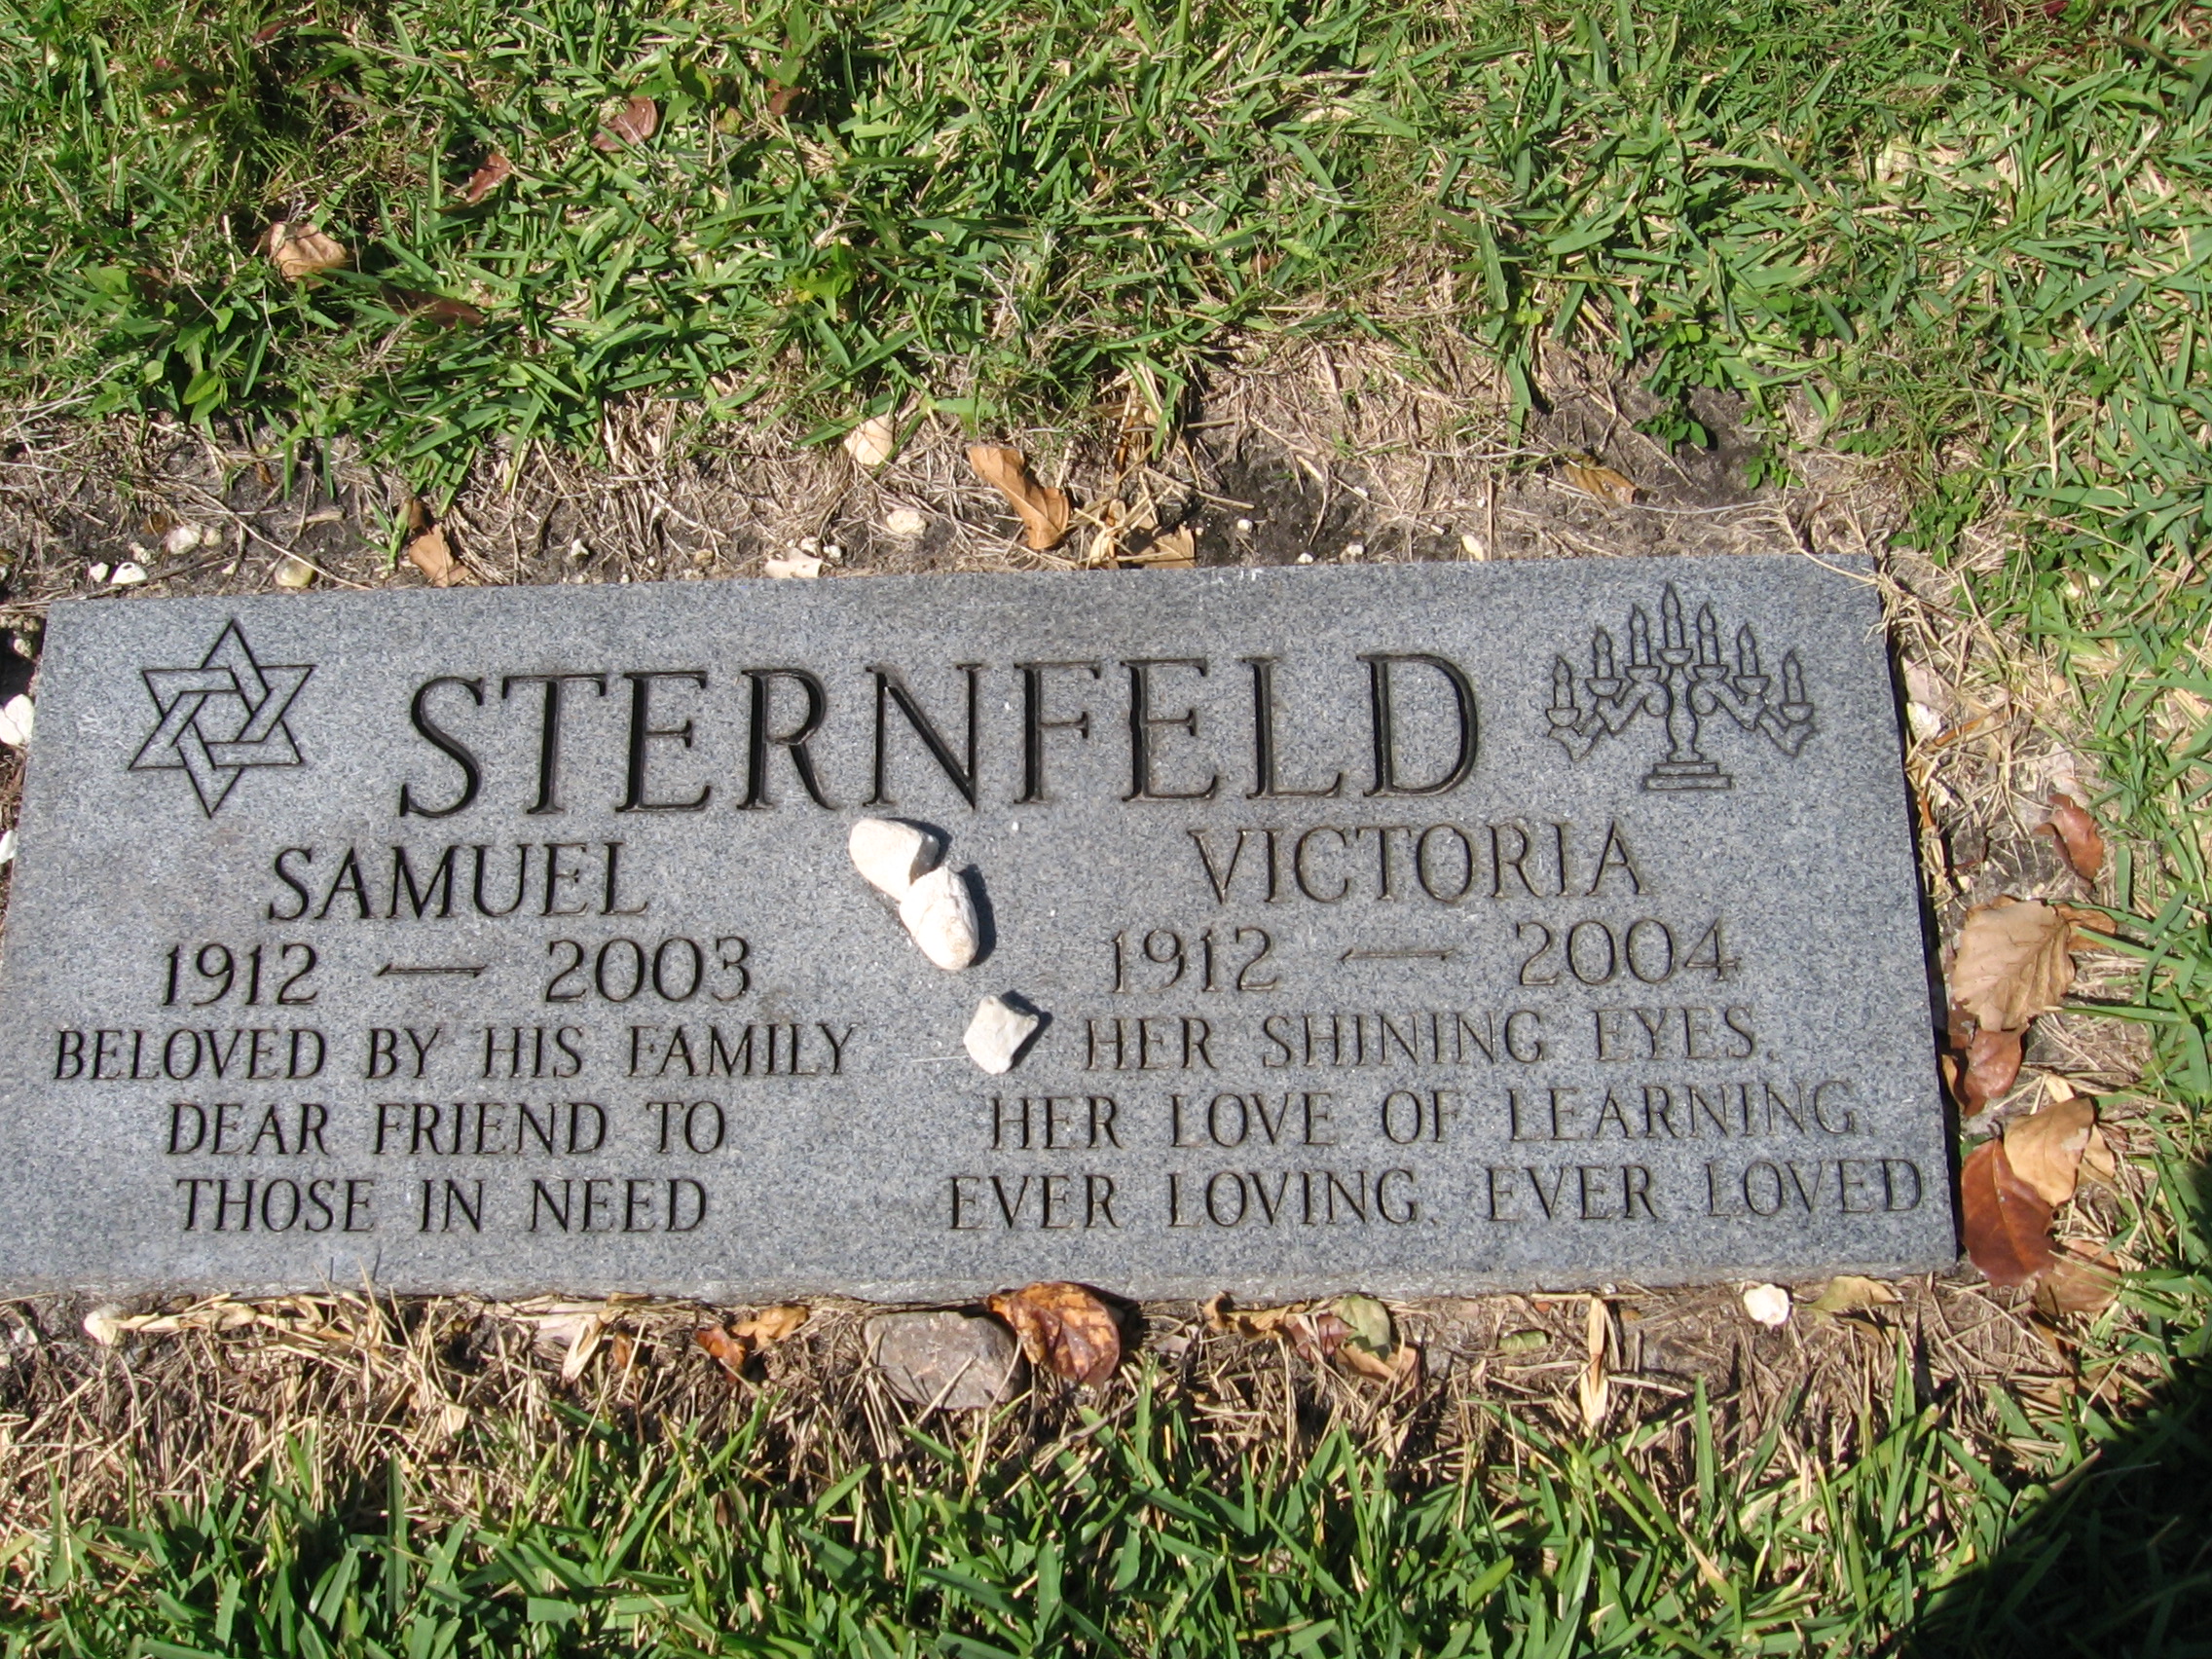 Samuel Sternfeld